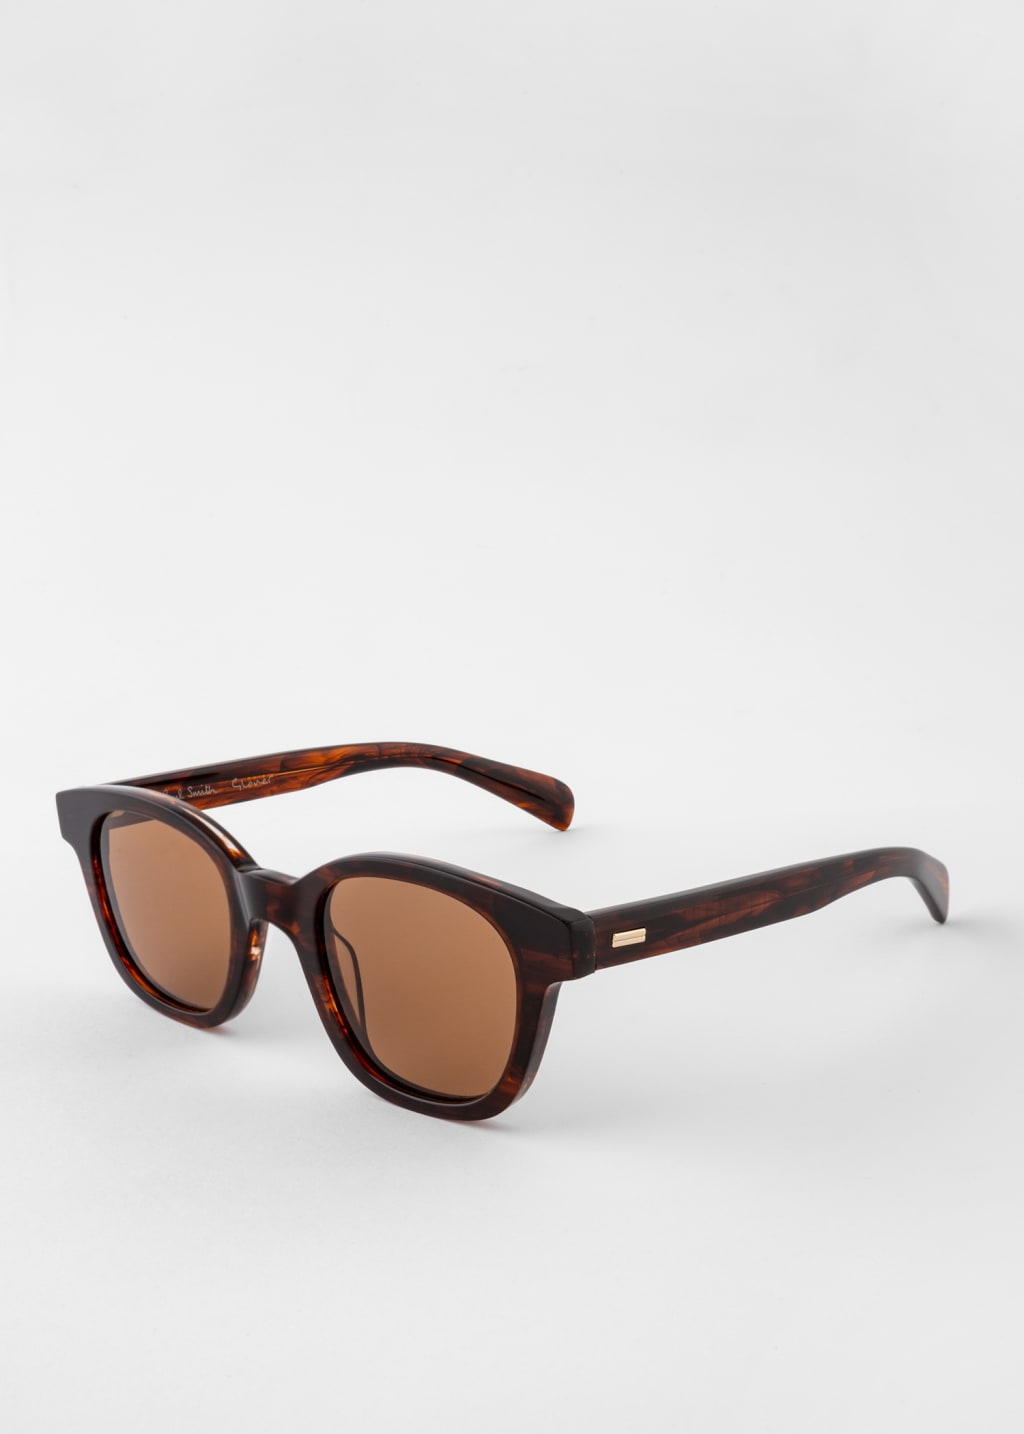 Product view - Havana 'Glover' Sunglasses